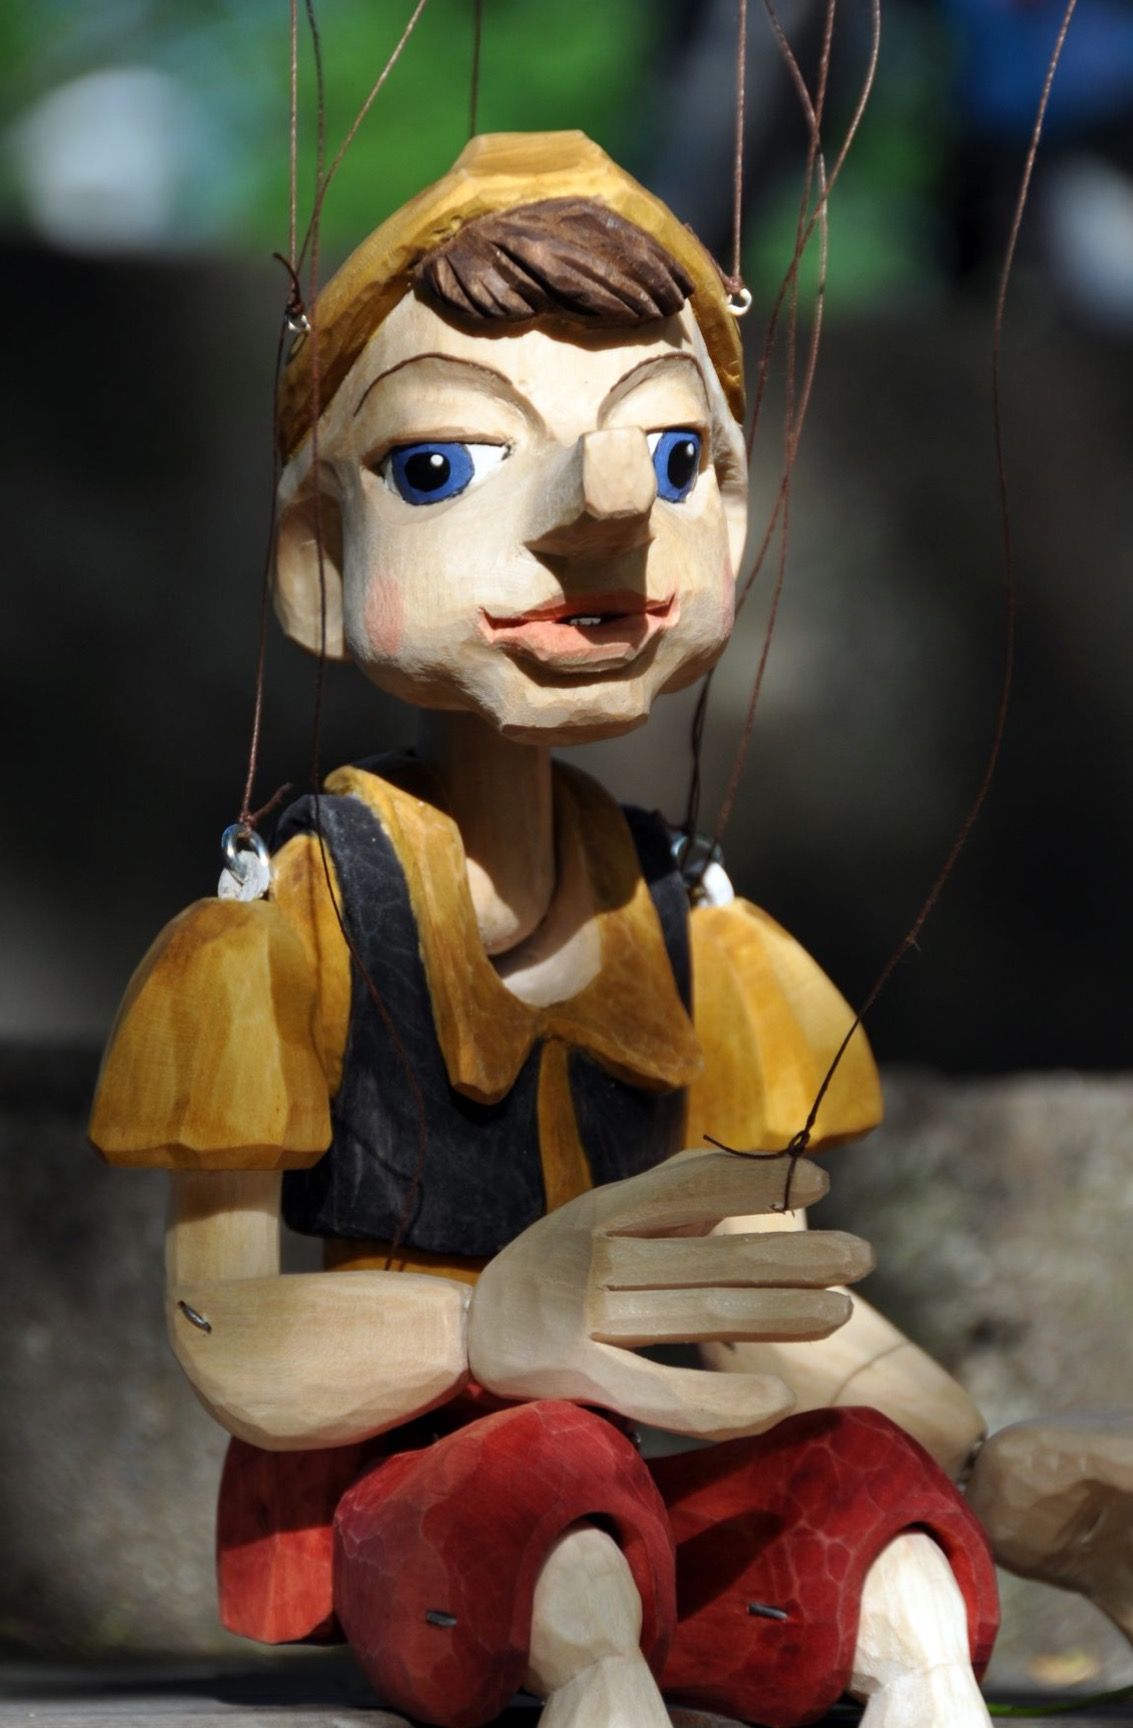 PINOCCHIO promises. Marionette puppet, Puppets, Wooden puppet